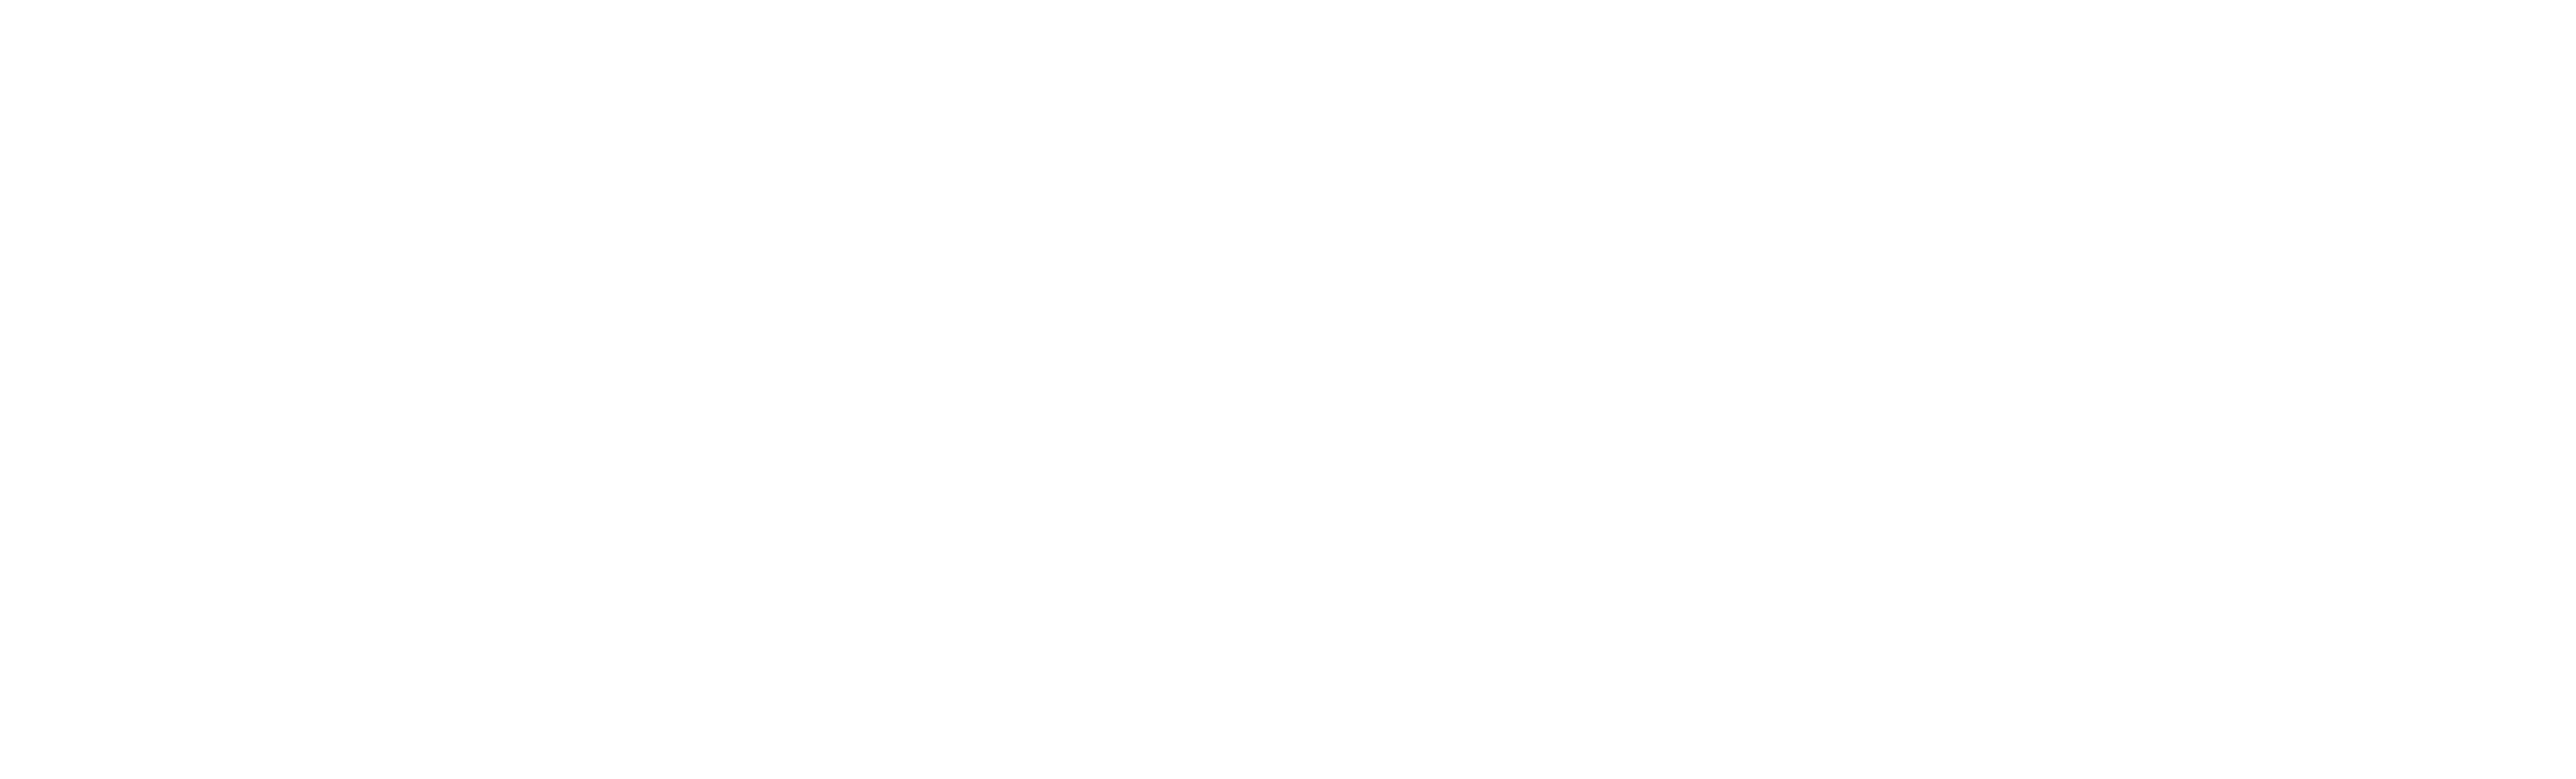 Habefast Reyl Intesa Sanpaolo Logo